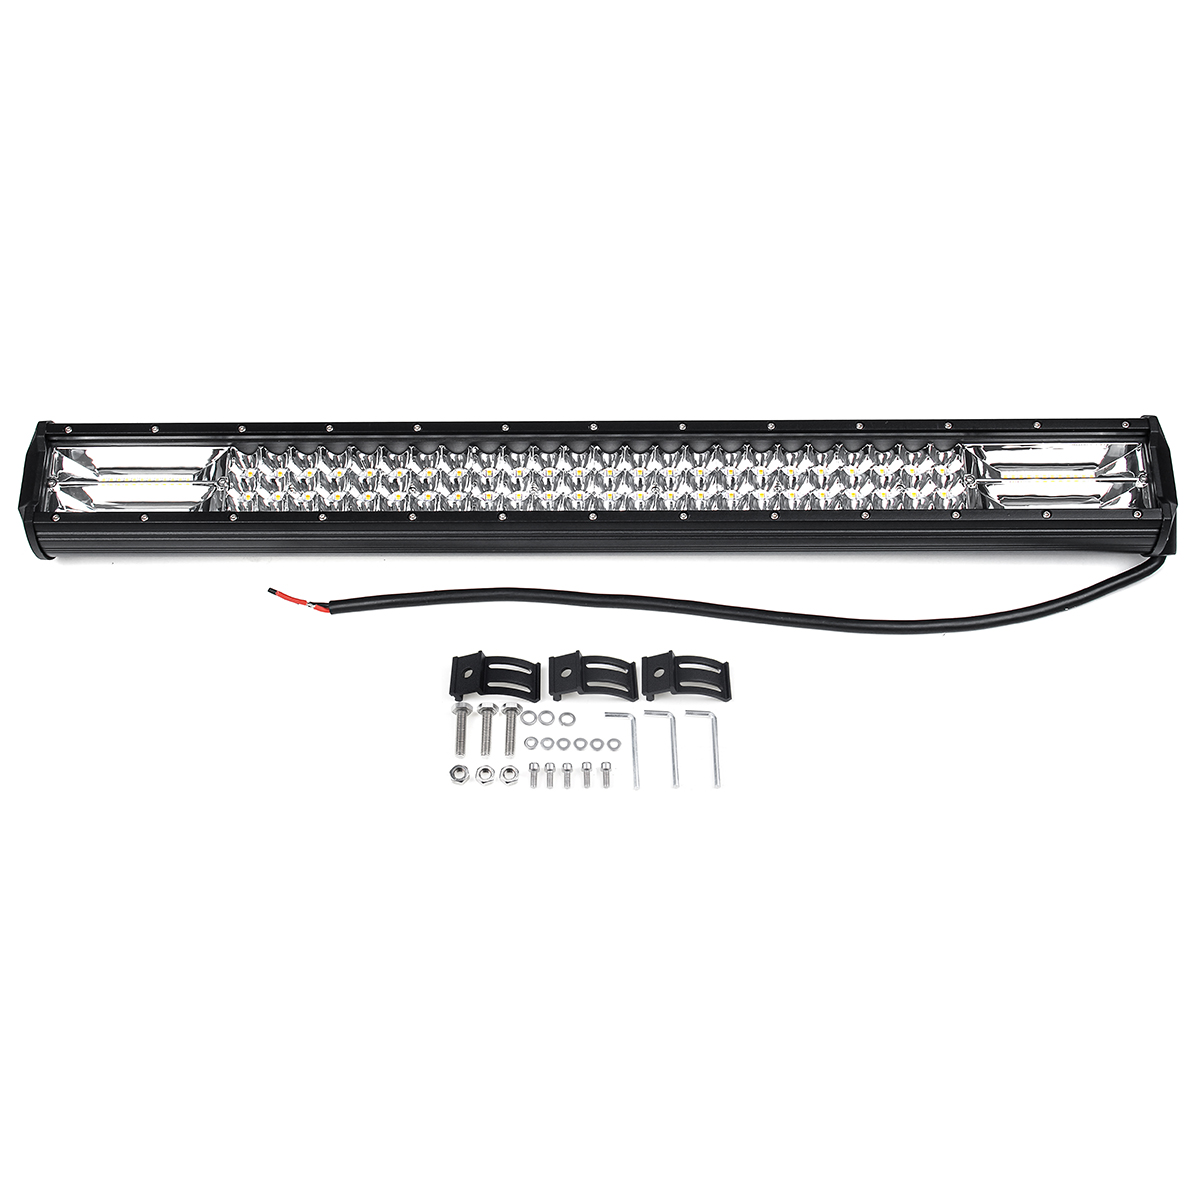 

25Inch 360W LED Work Light Bar Strobe Flash Lamp White & Amber Offroad for SUV ATV